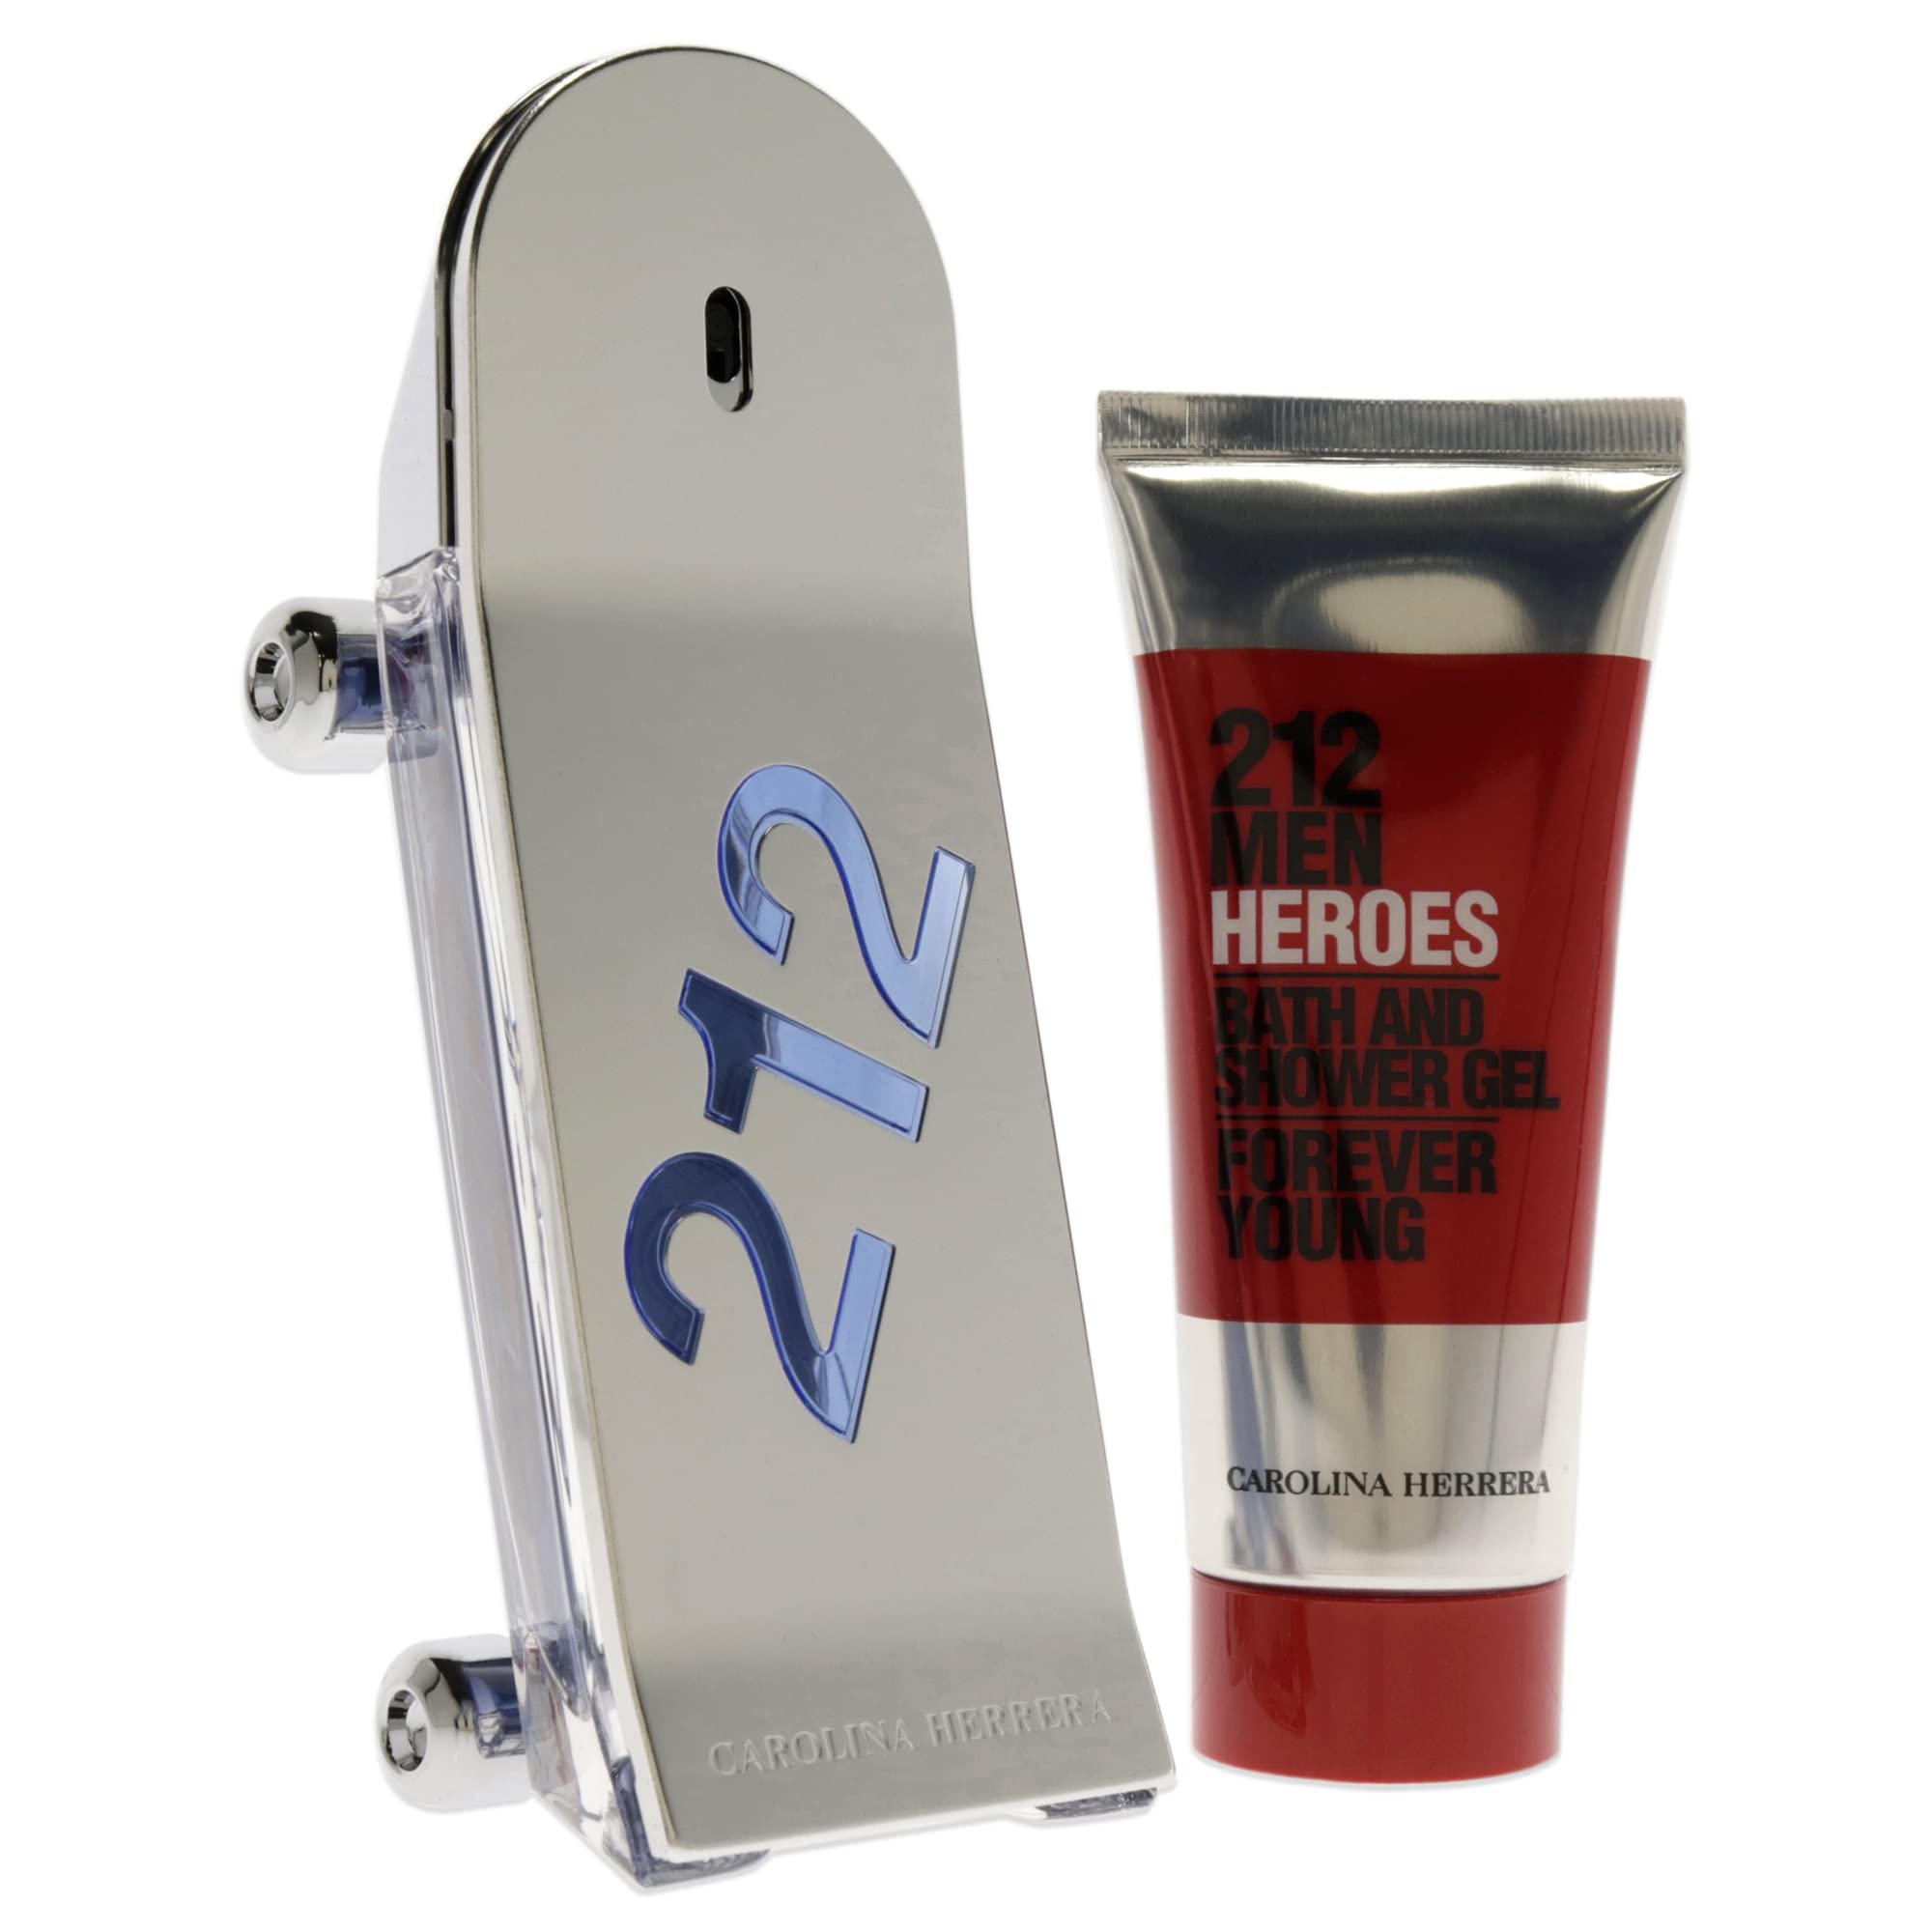 Carolina Herrera 212 Heroes Forever Young 3oz EDT Spray, 3.4oz Bath and Shower Gel Men 2 Pc Gift Set